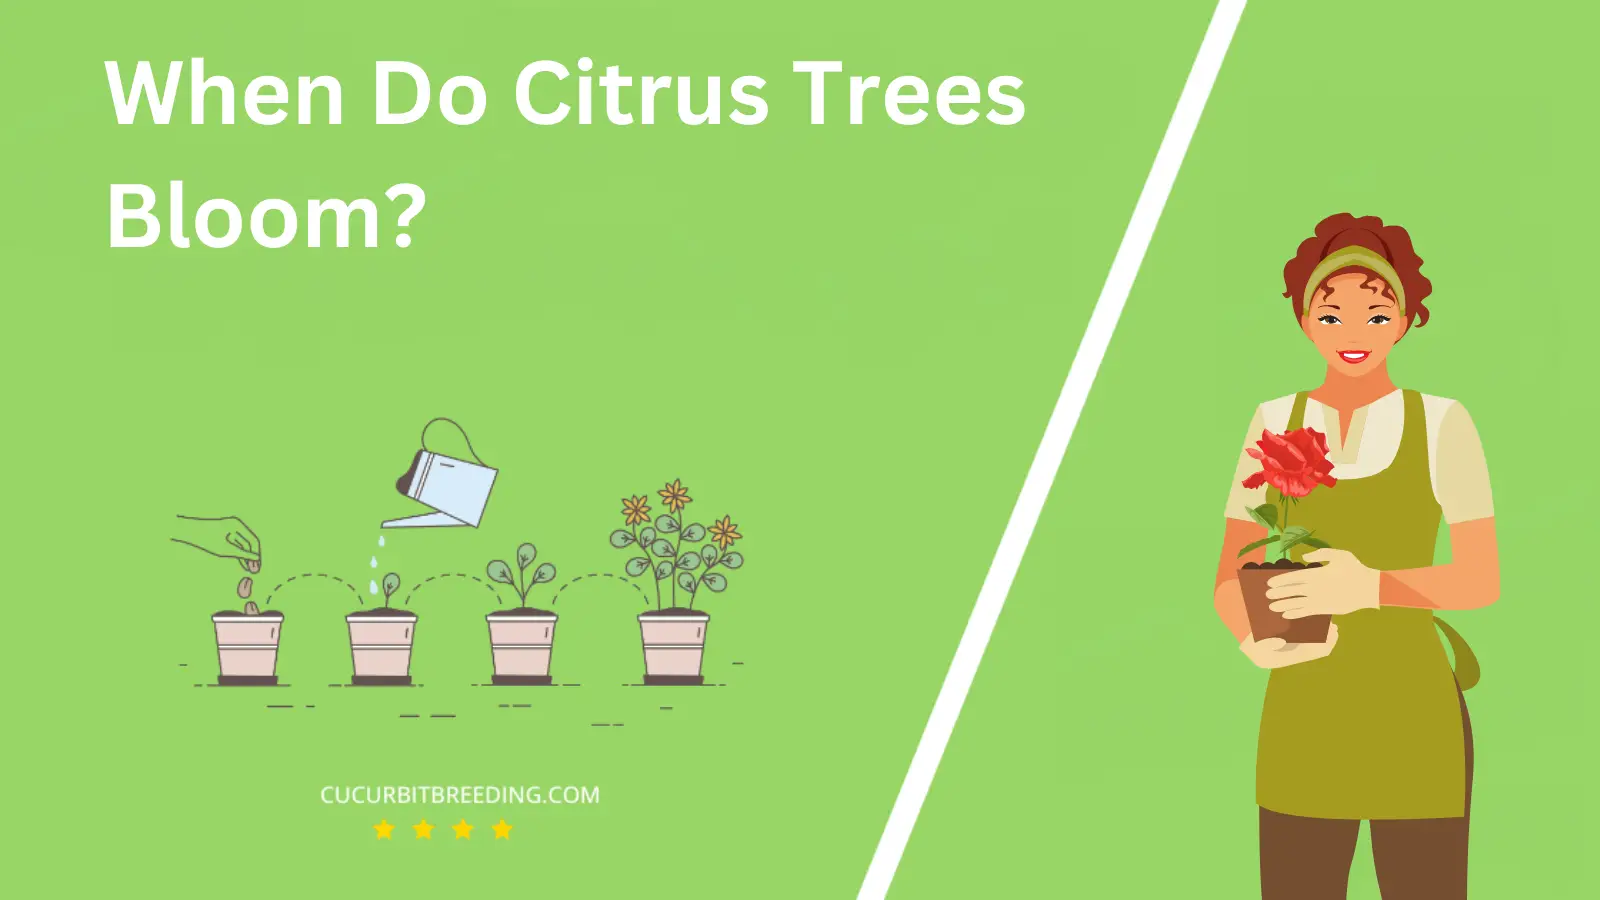 When Do Citrus Trees Bloom?